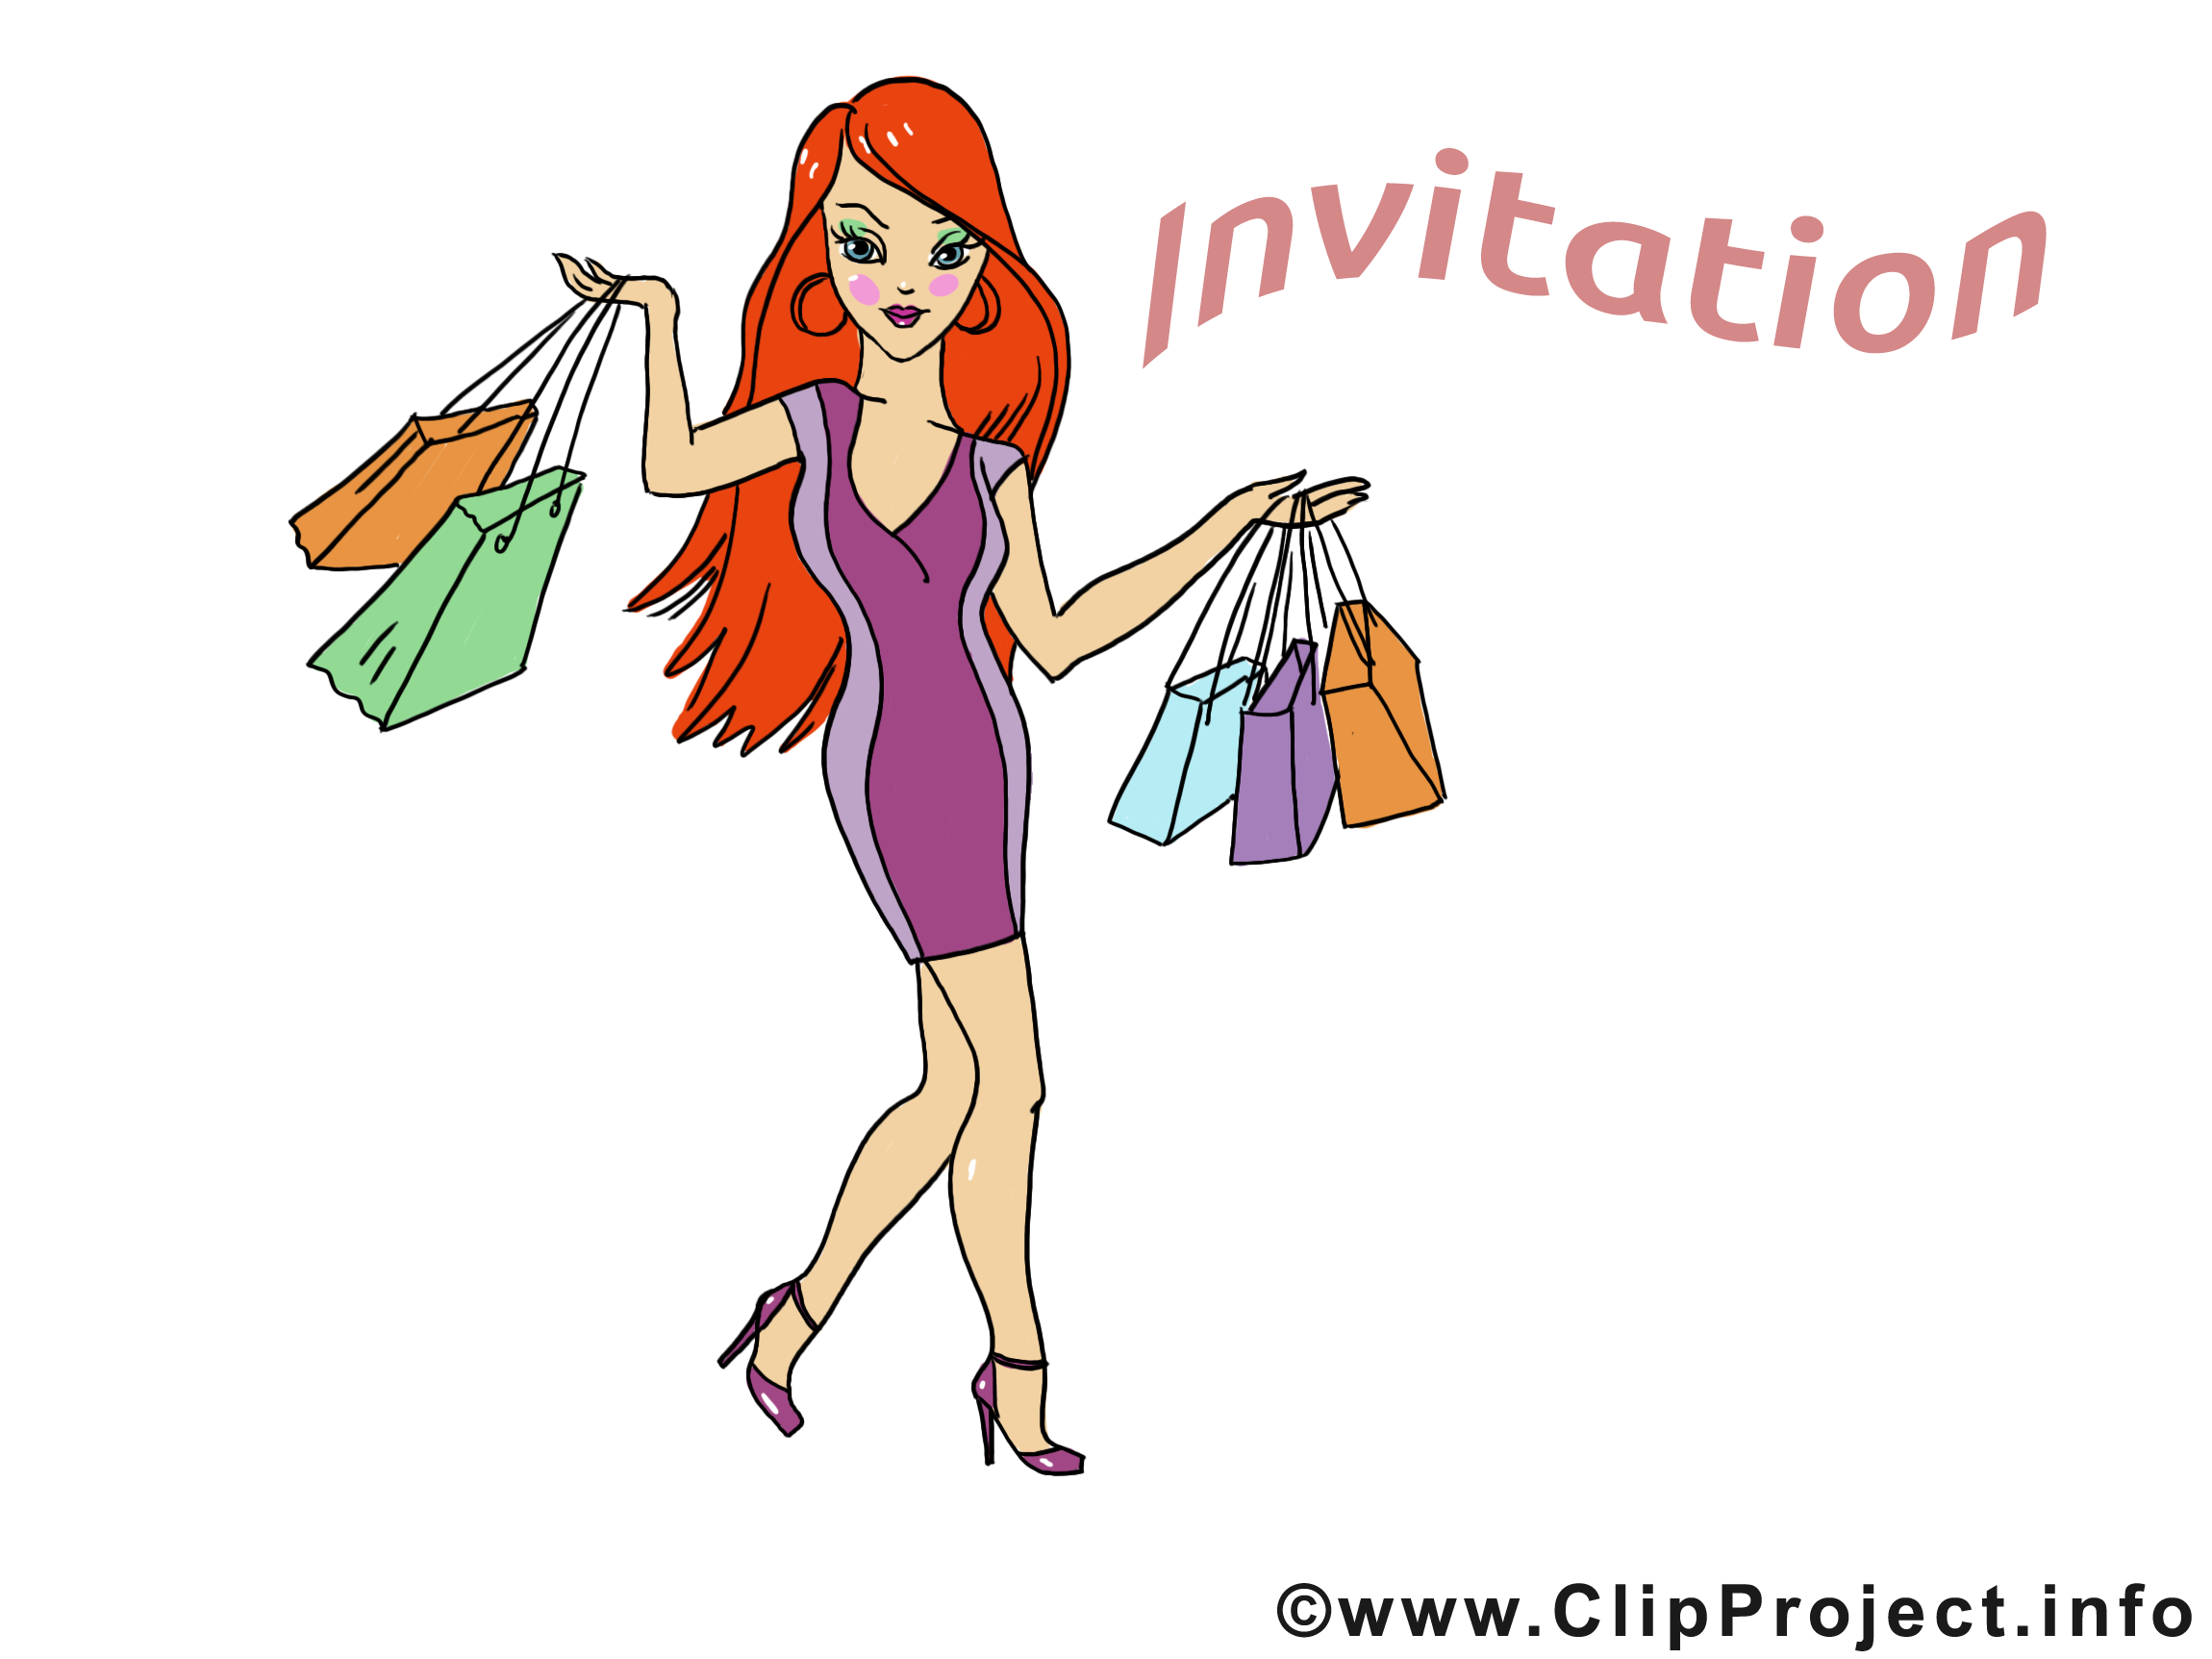 Shoping clipart - Invitation dessins gratuits